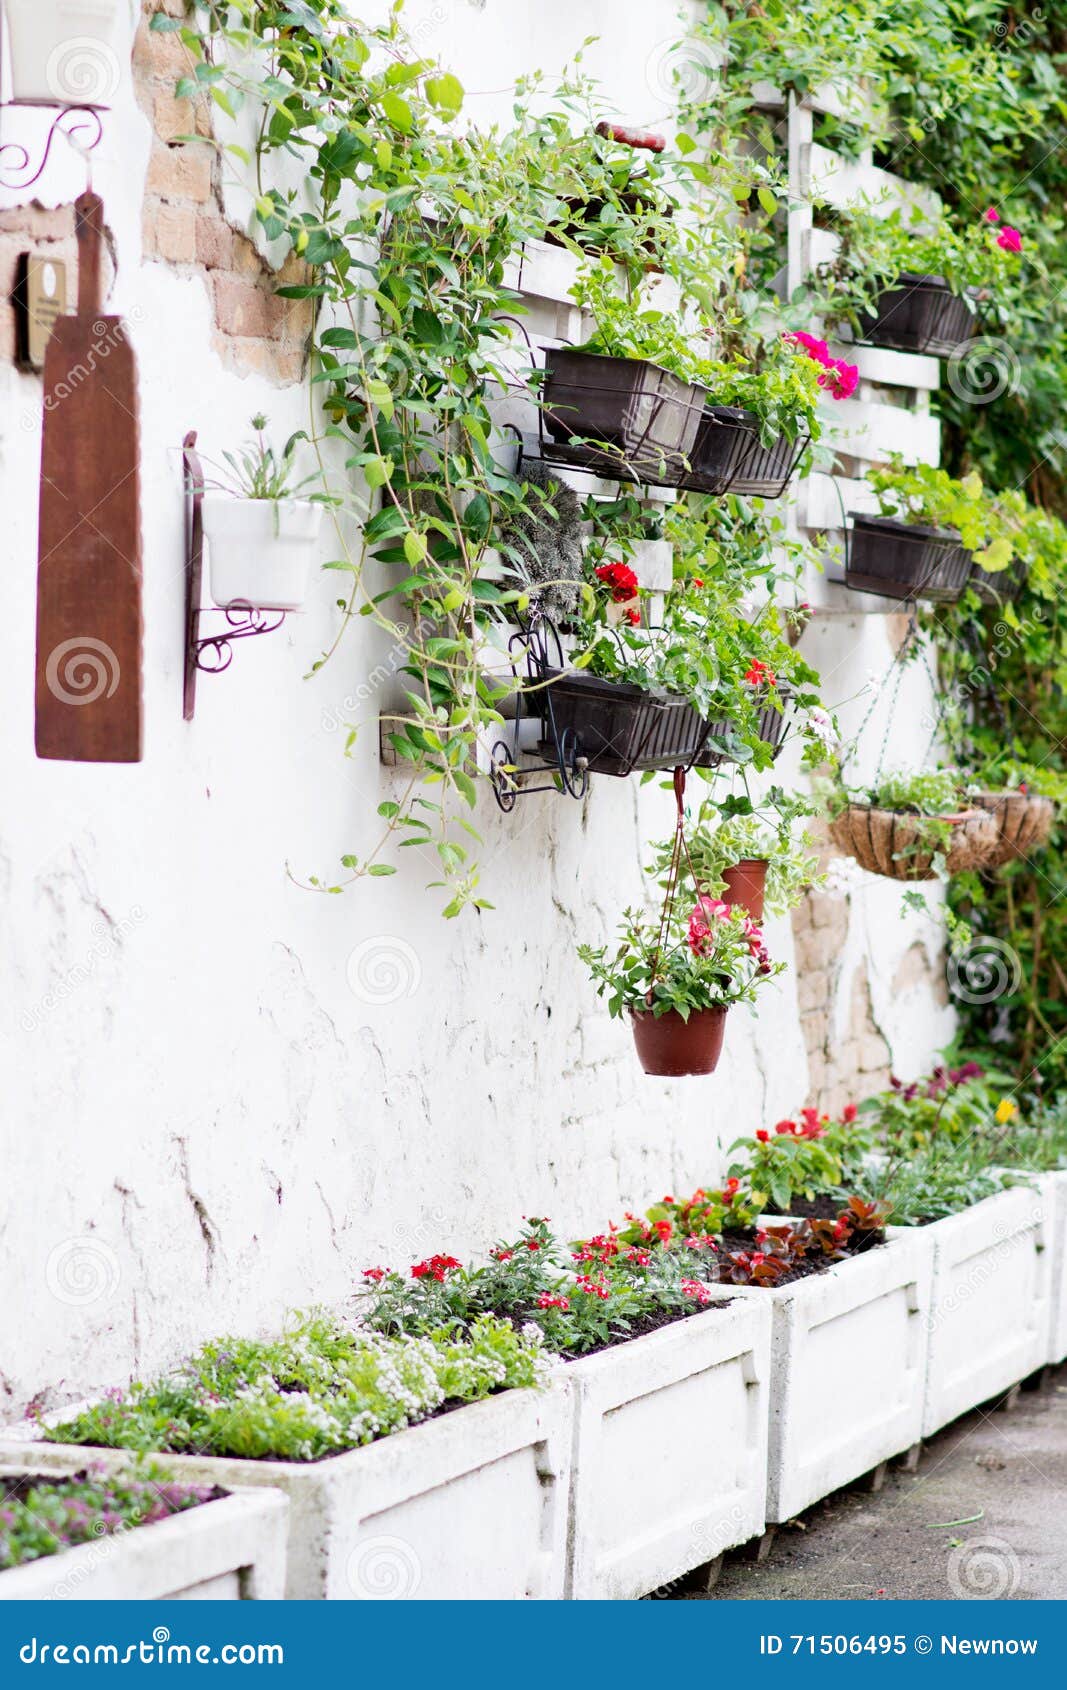 Pallet ideas for gardening stock image. Image of backyard - 71506495